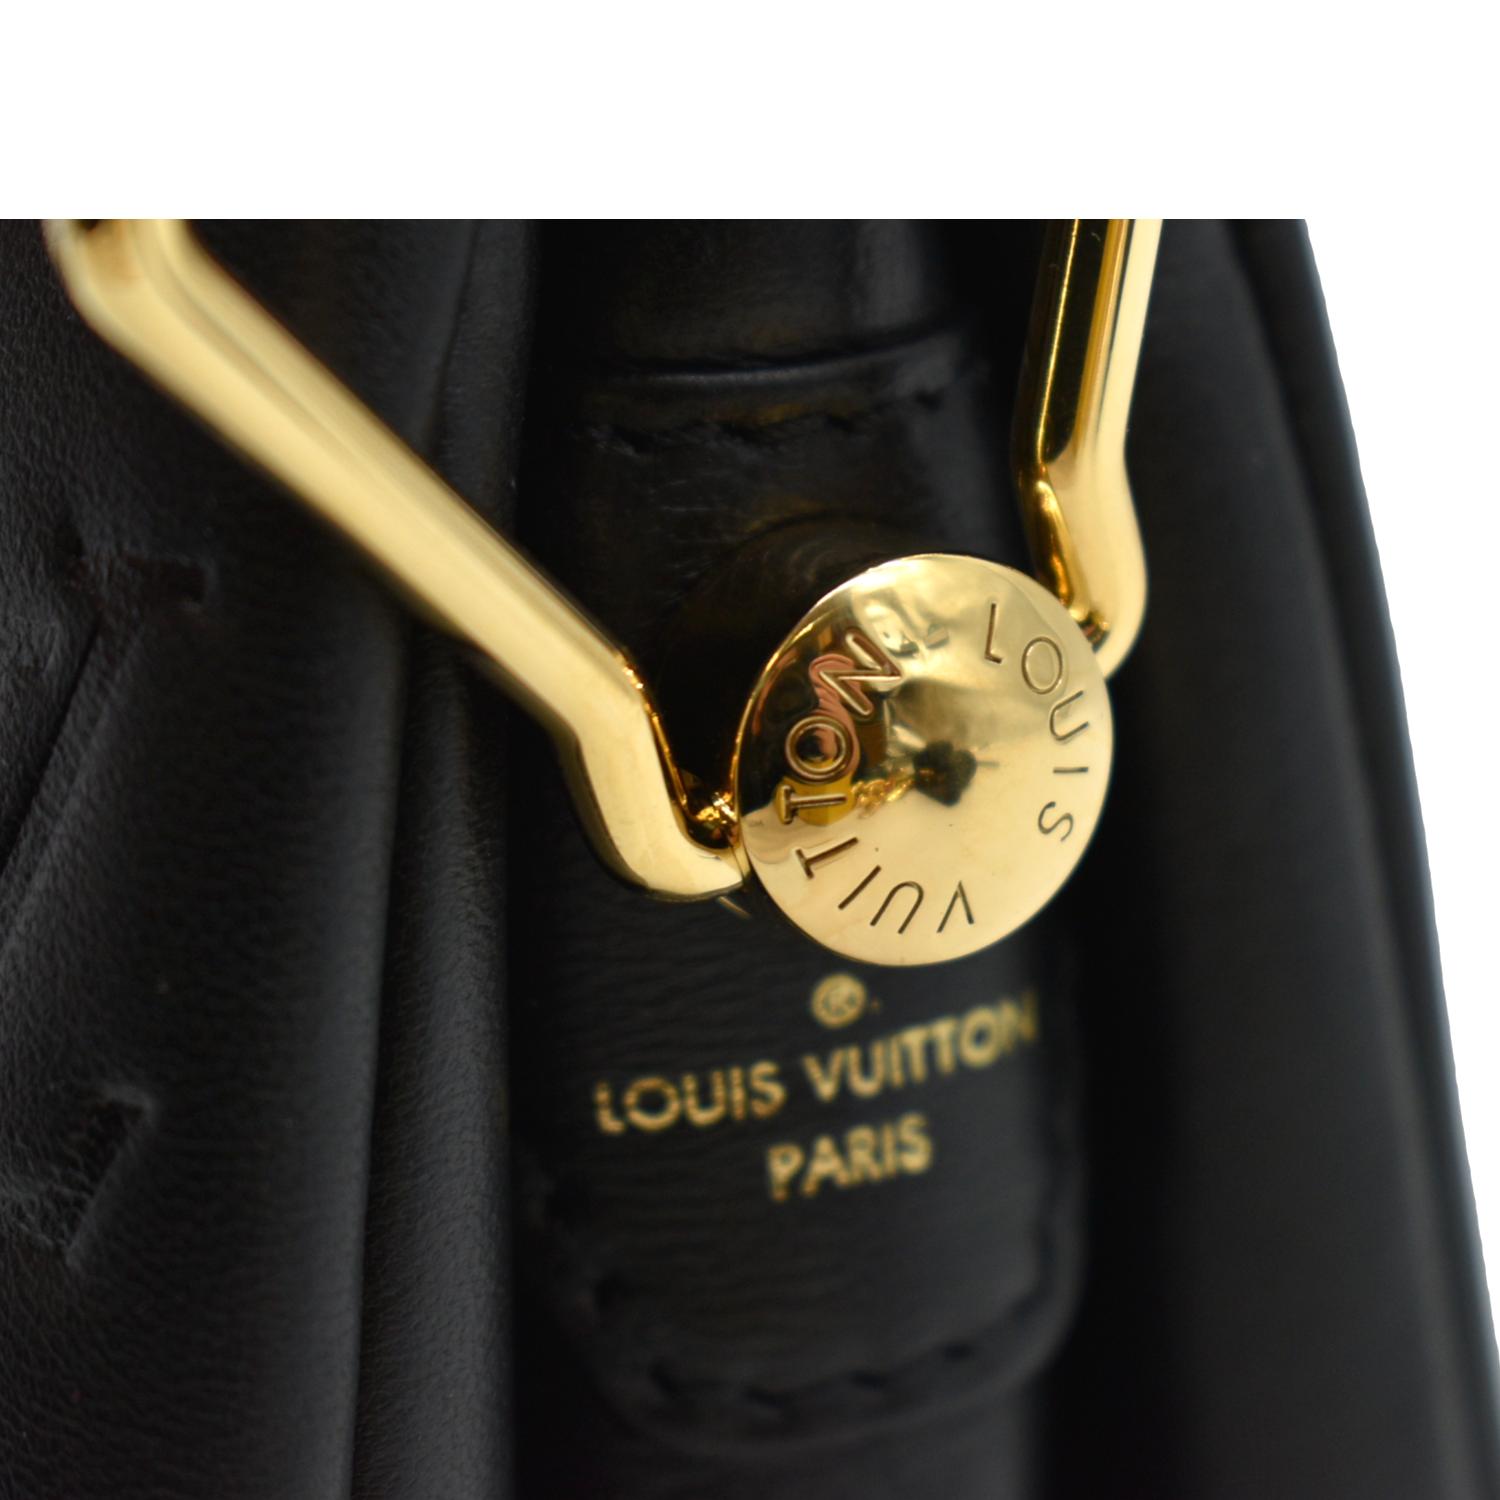 Louis Vuitton Black Monogram Coussin BB Calfskin Leather Purse Crossbody  M21259